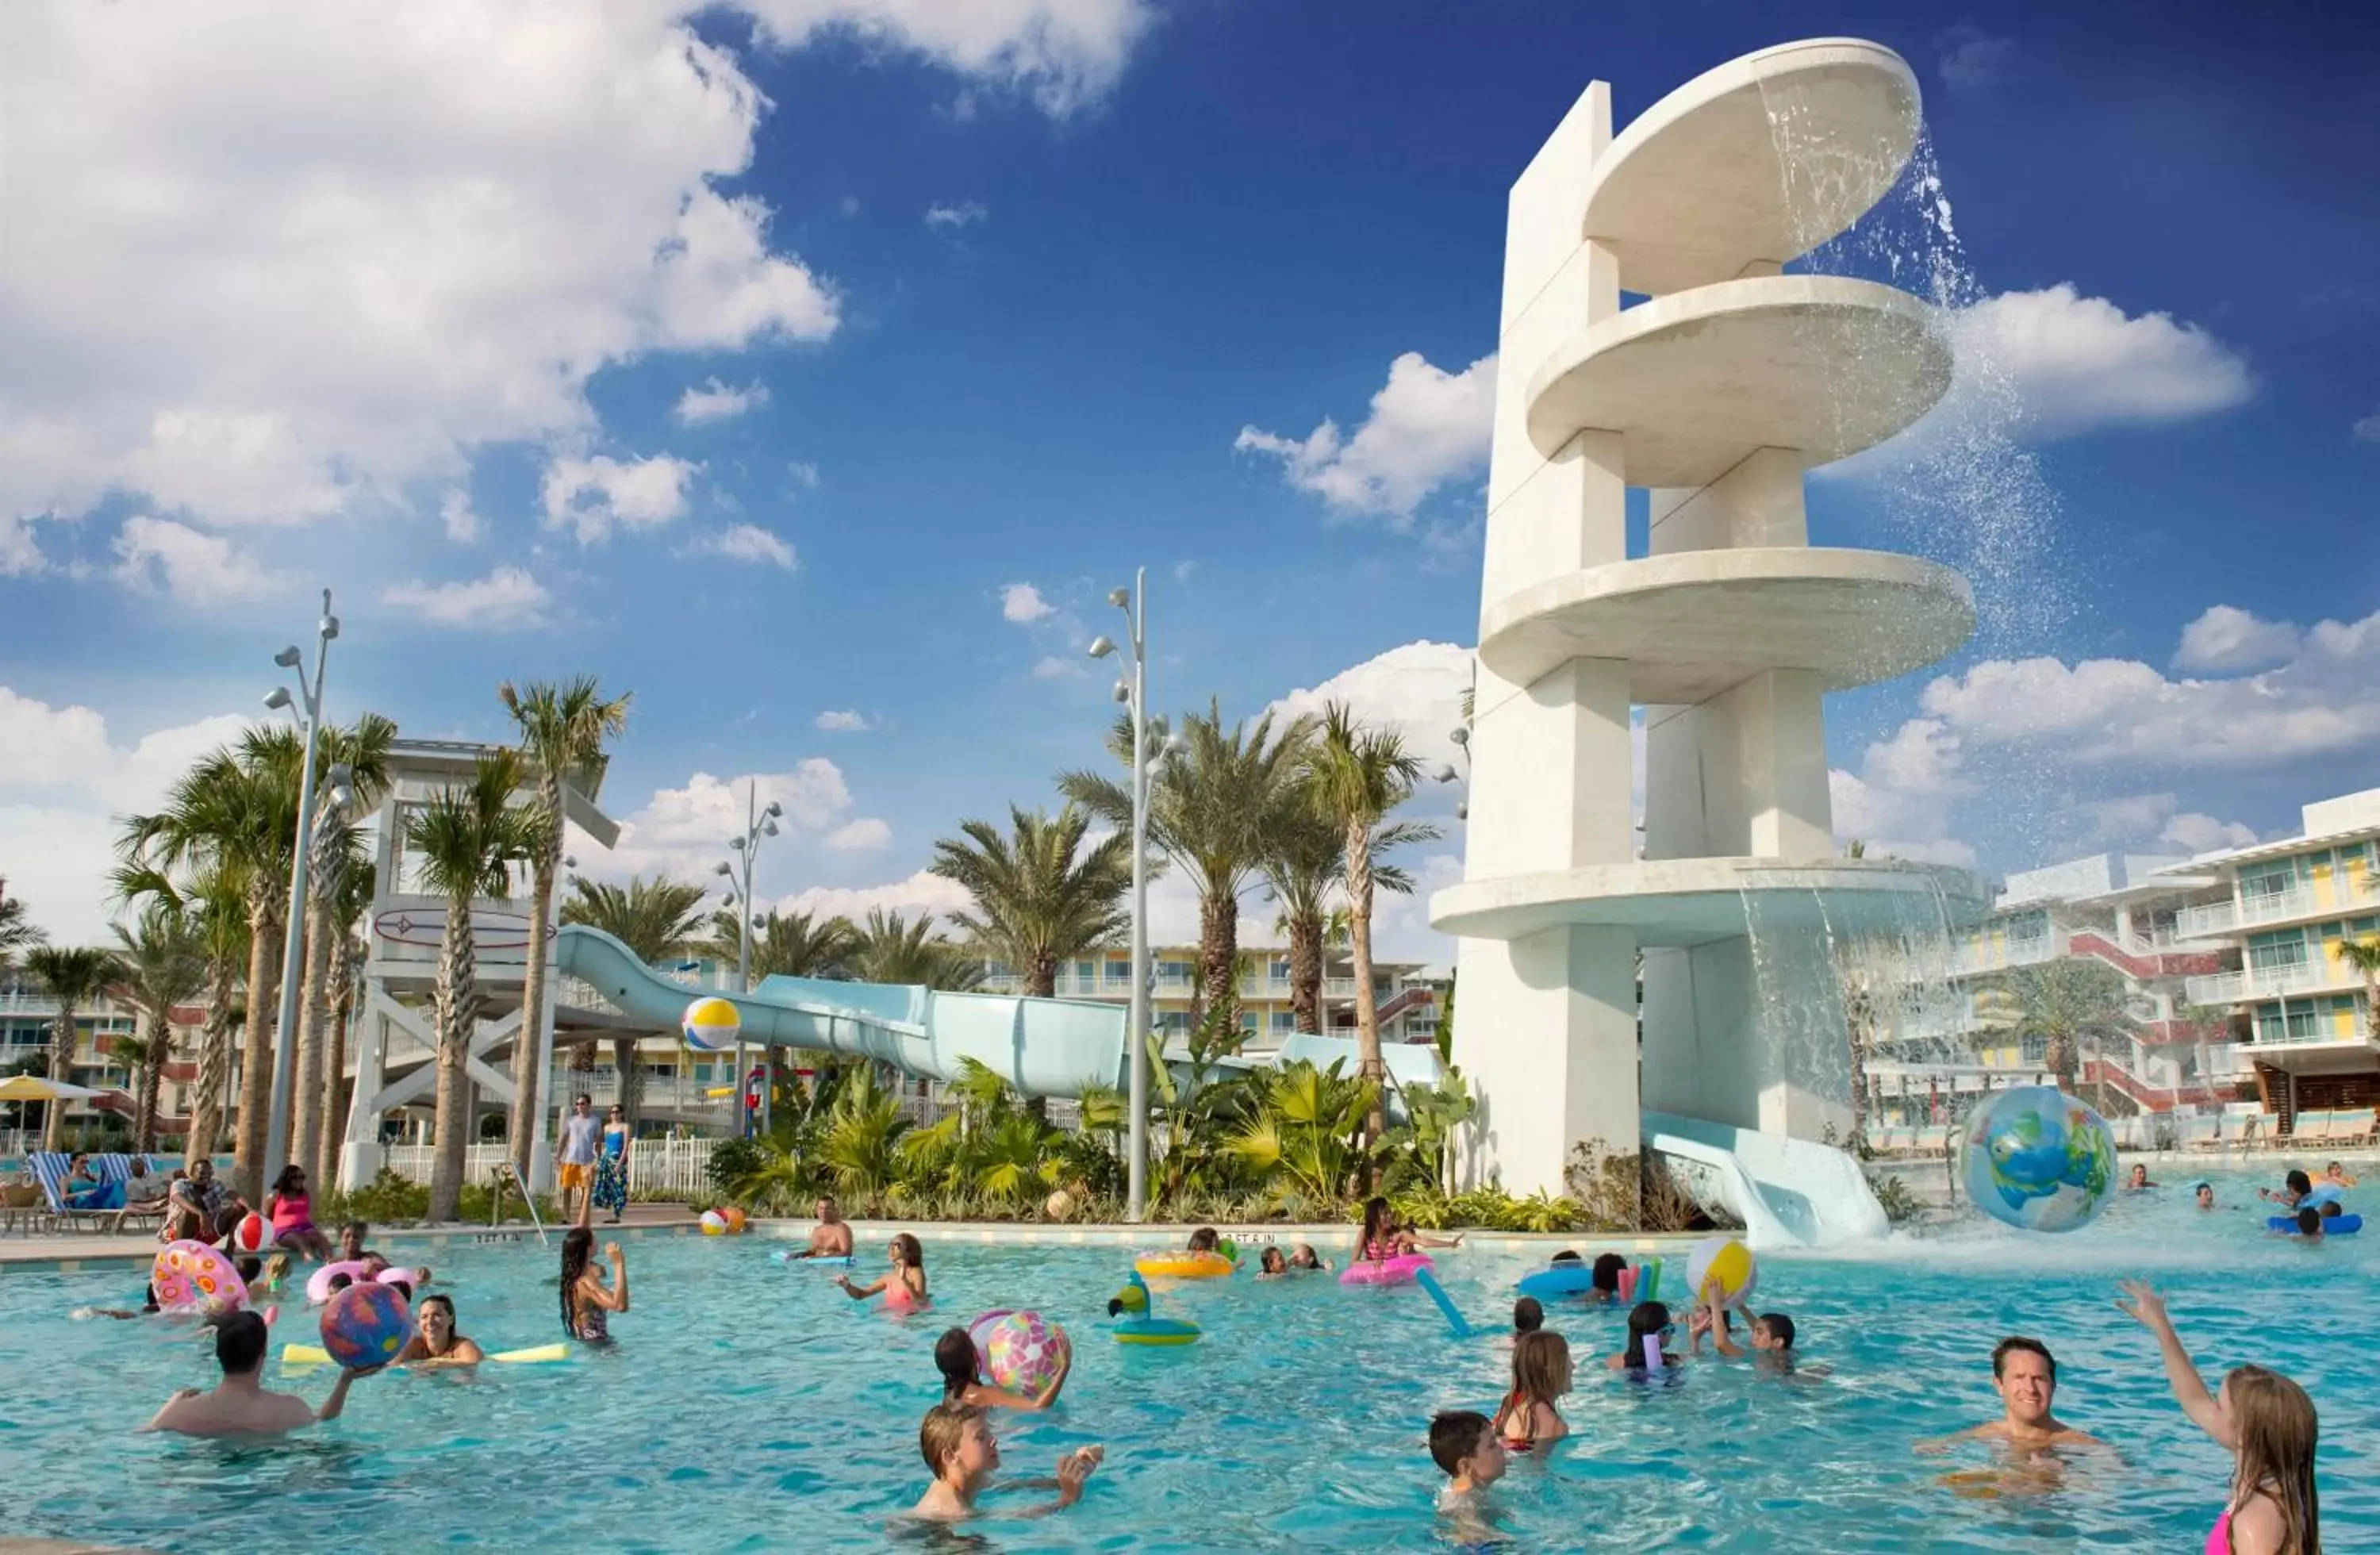 Aqua park in Universal's Cabana Bay Beach Resort